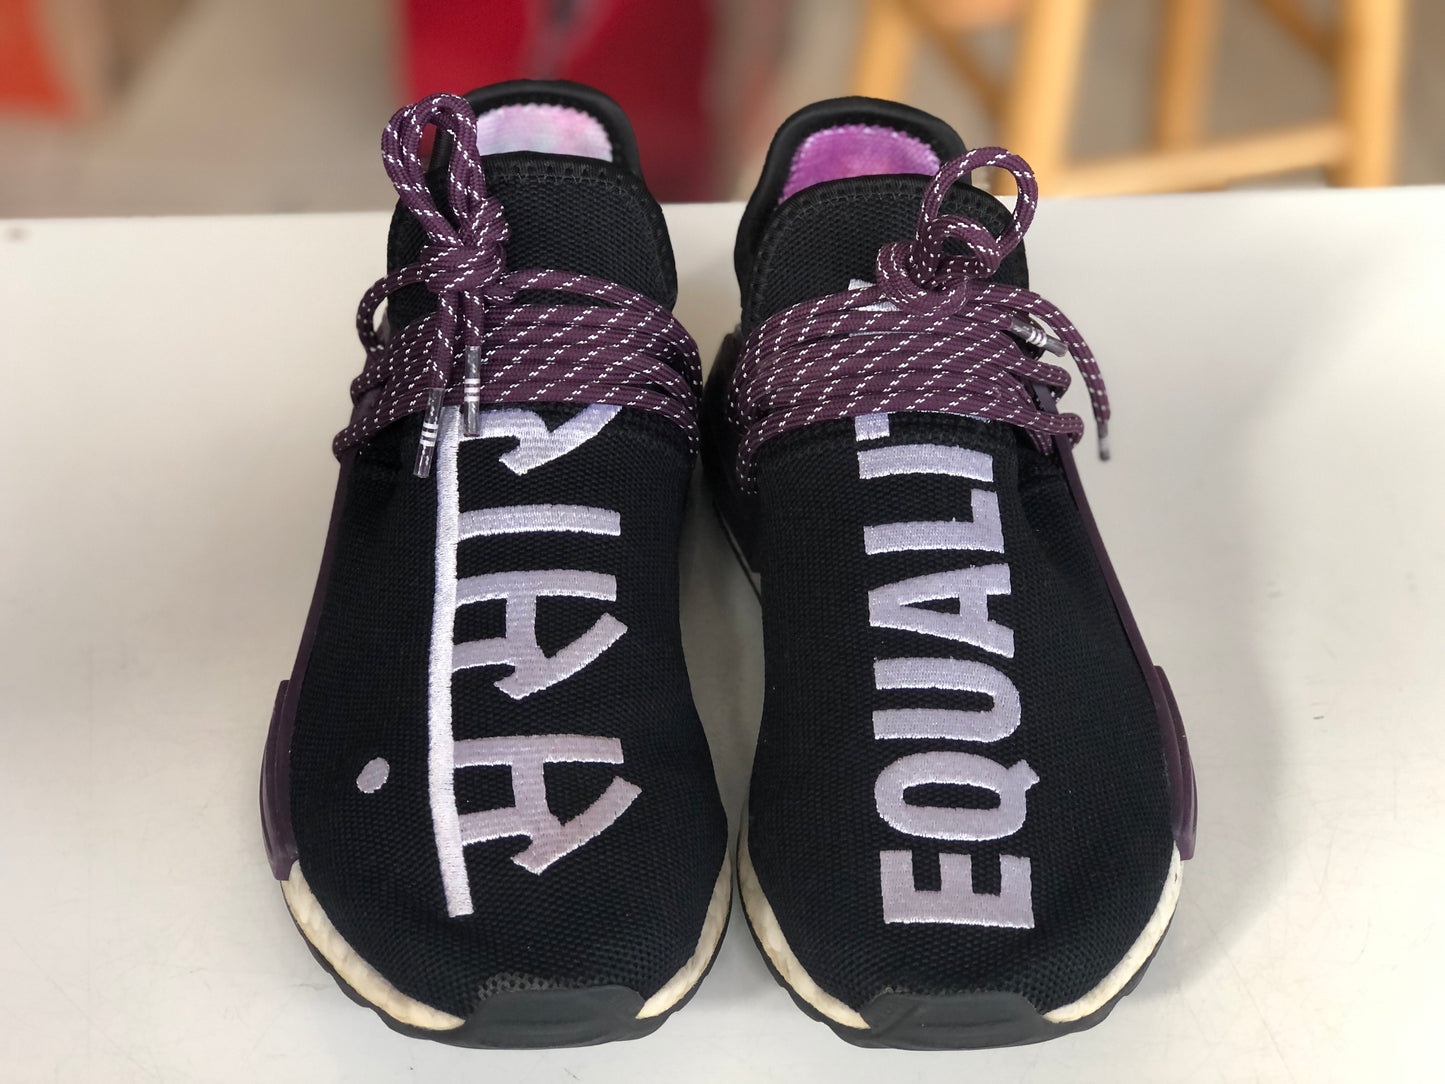 Adidas Human Race Nmd Trail Equality size 7.5